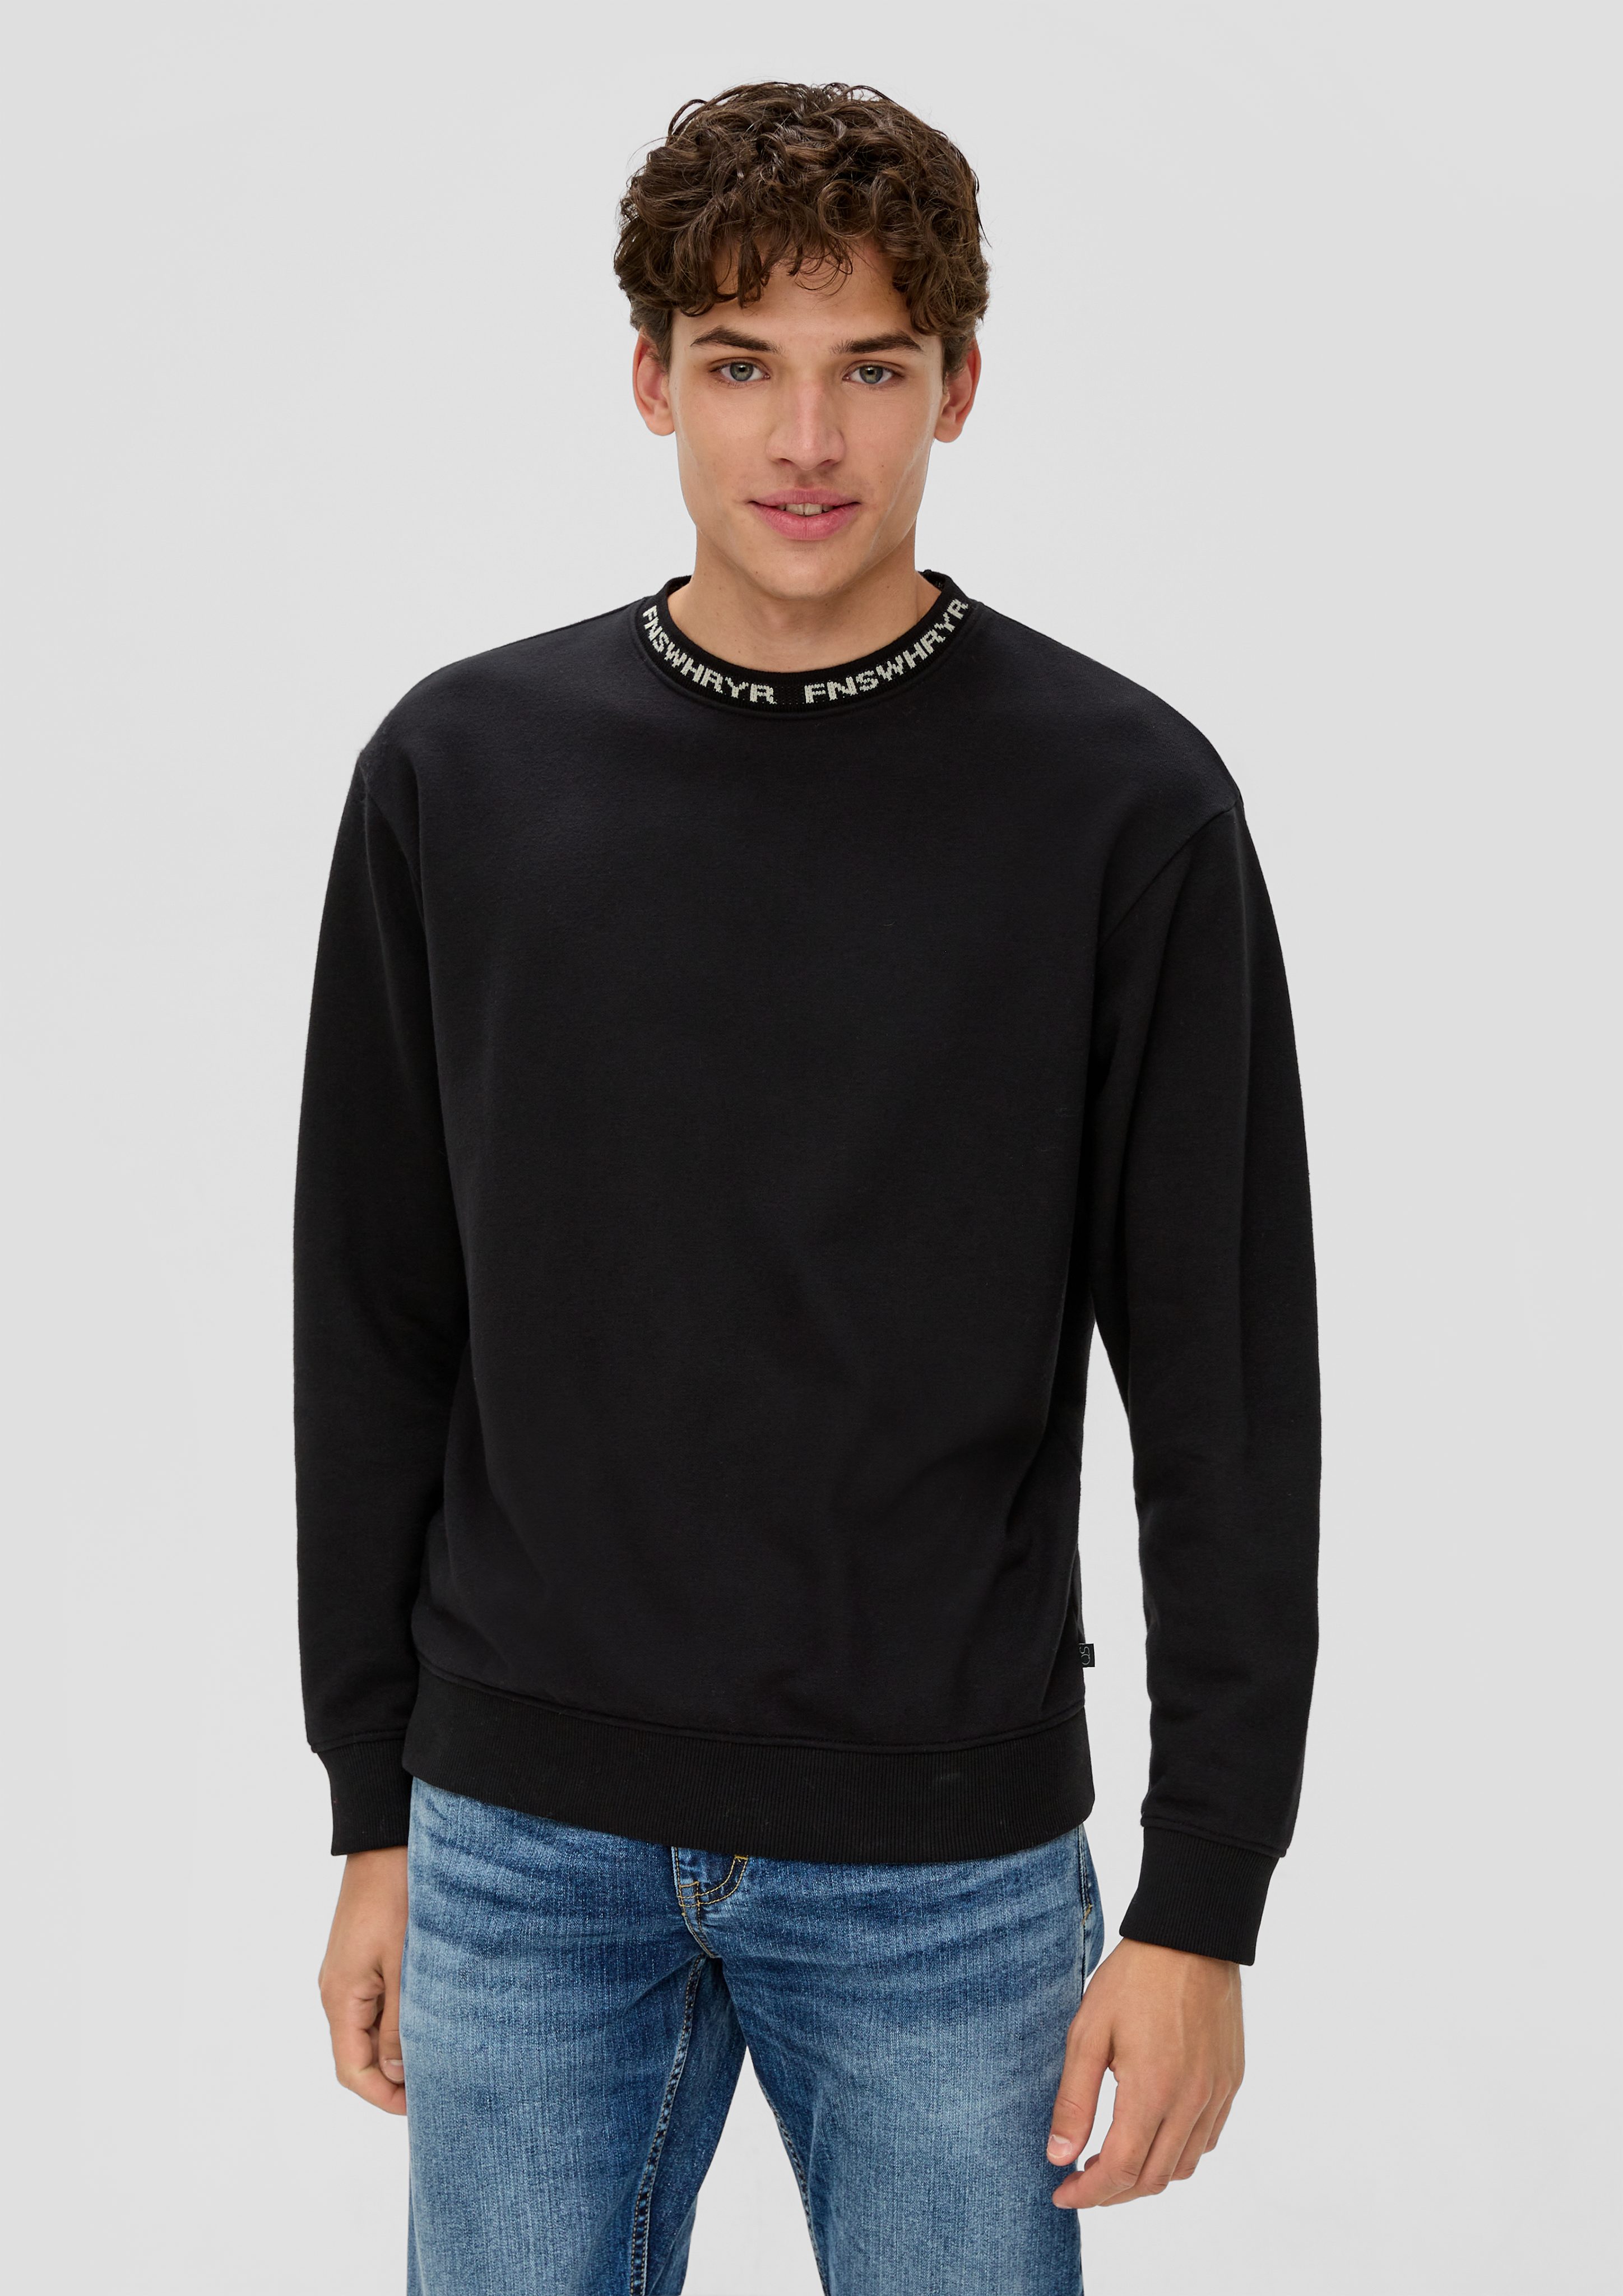 QS Sweatshirt Sweatshirt mit Jacquard-Blende Blende schwarz